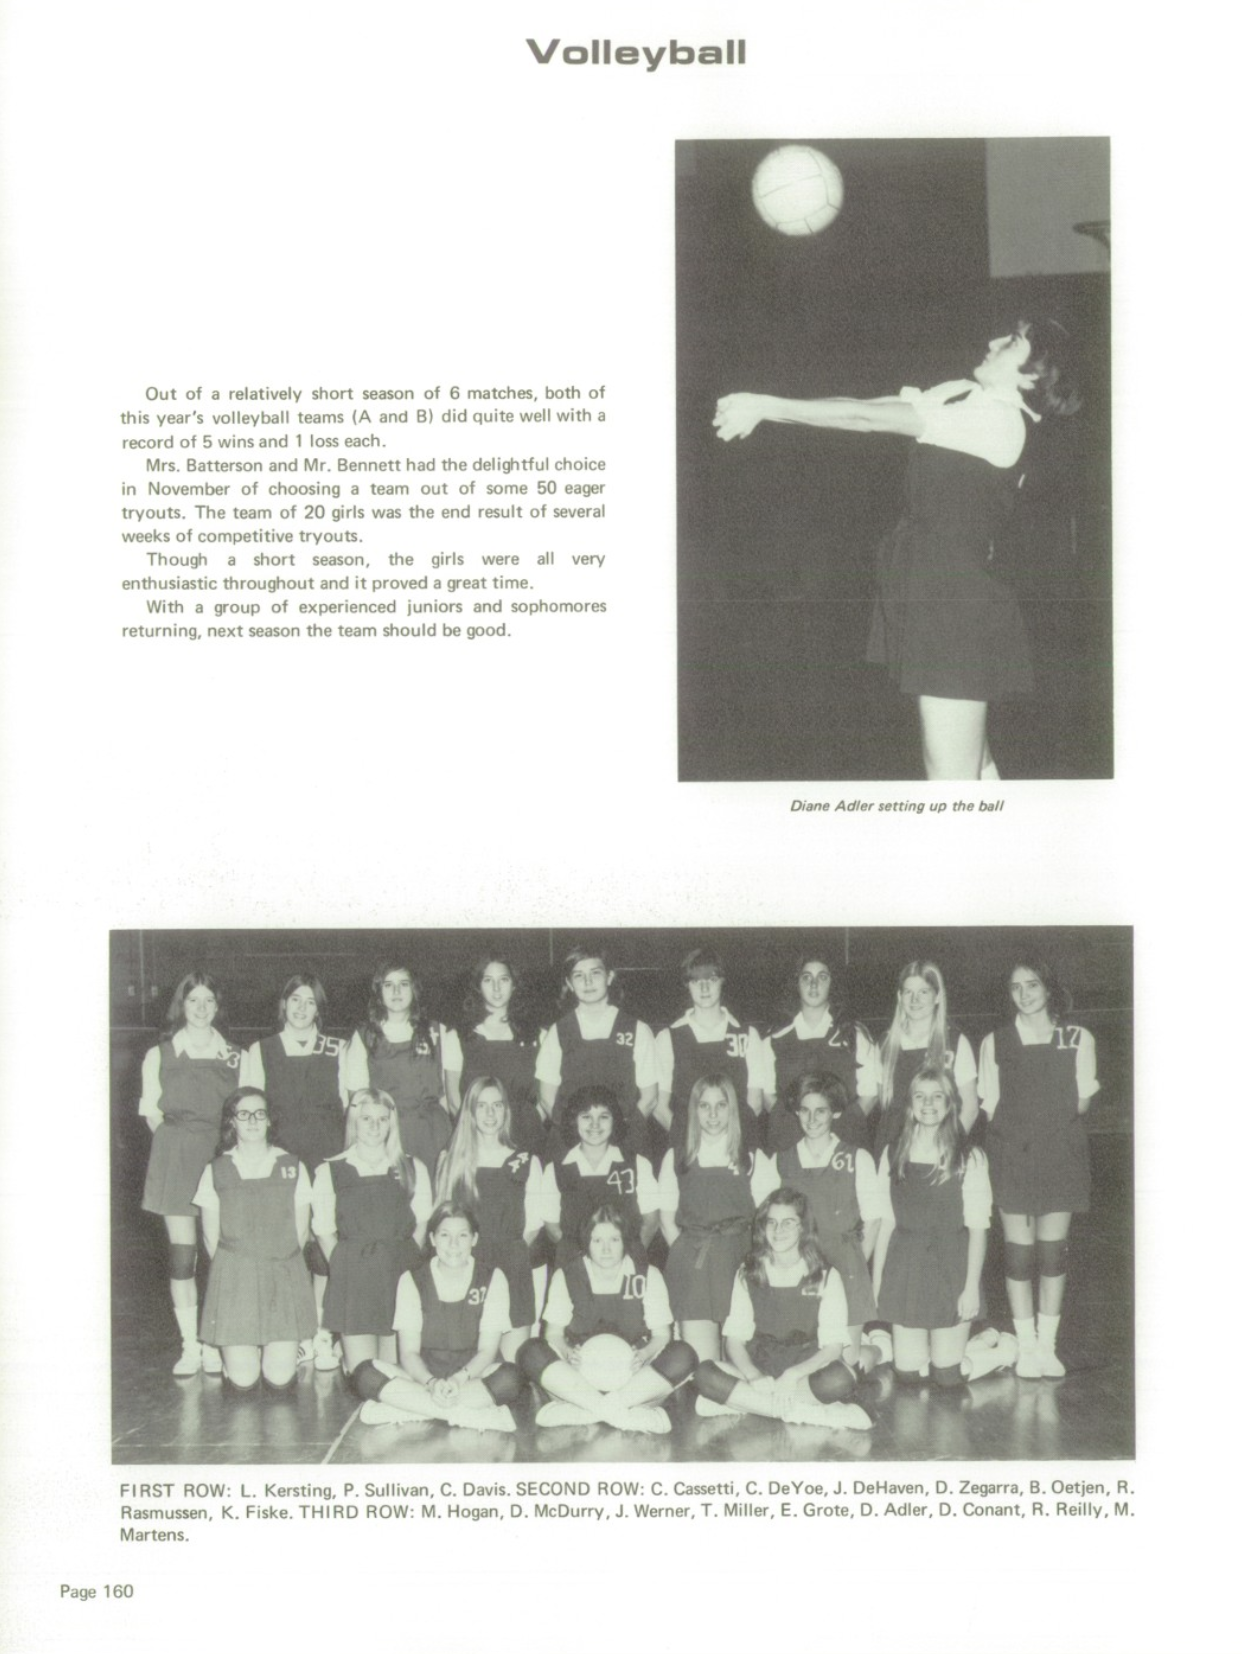 1973 Girls’ Volleyball Team